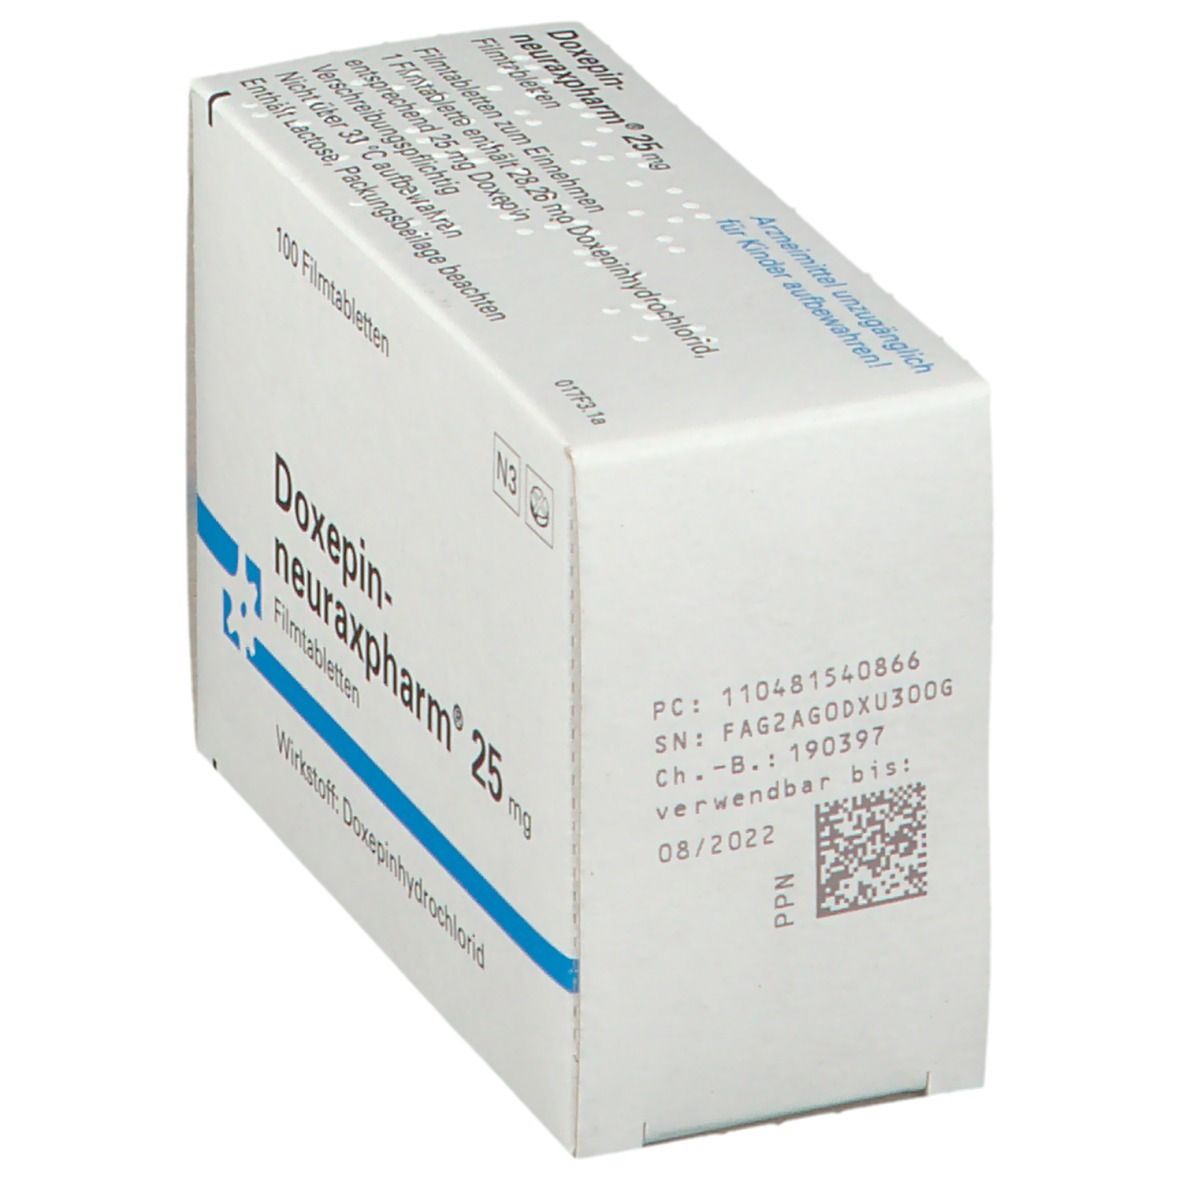 Doxepin-neuraxpharm® 25 mg